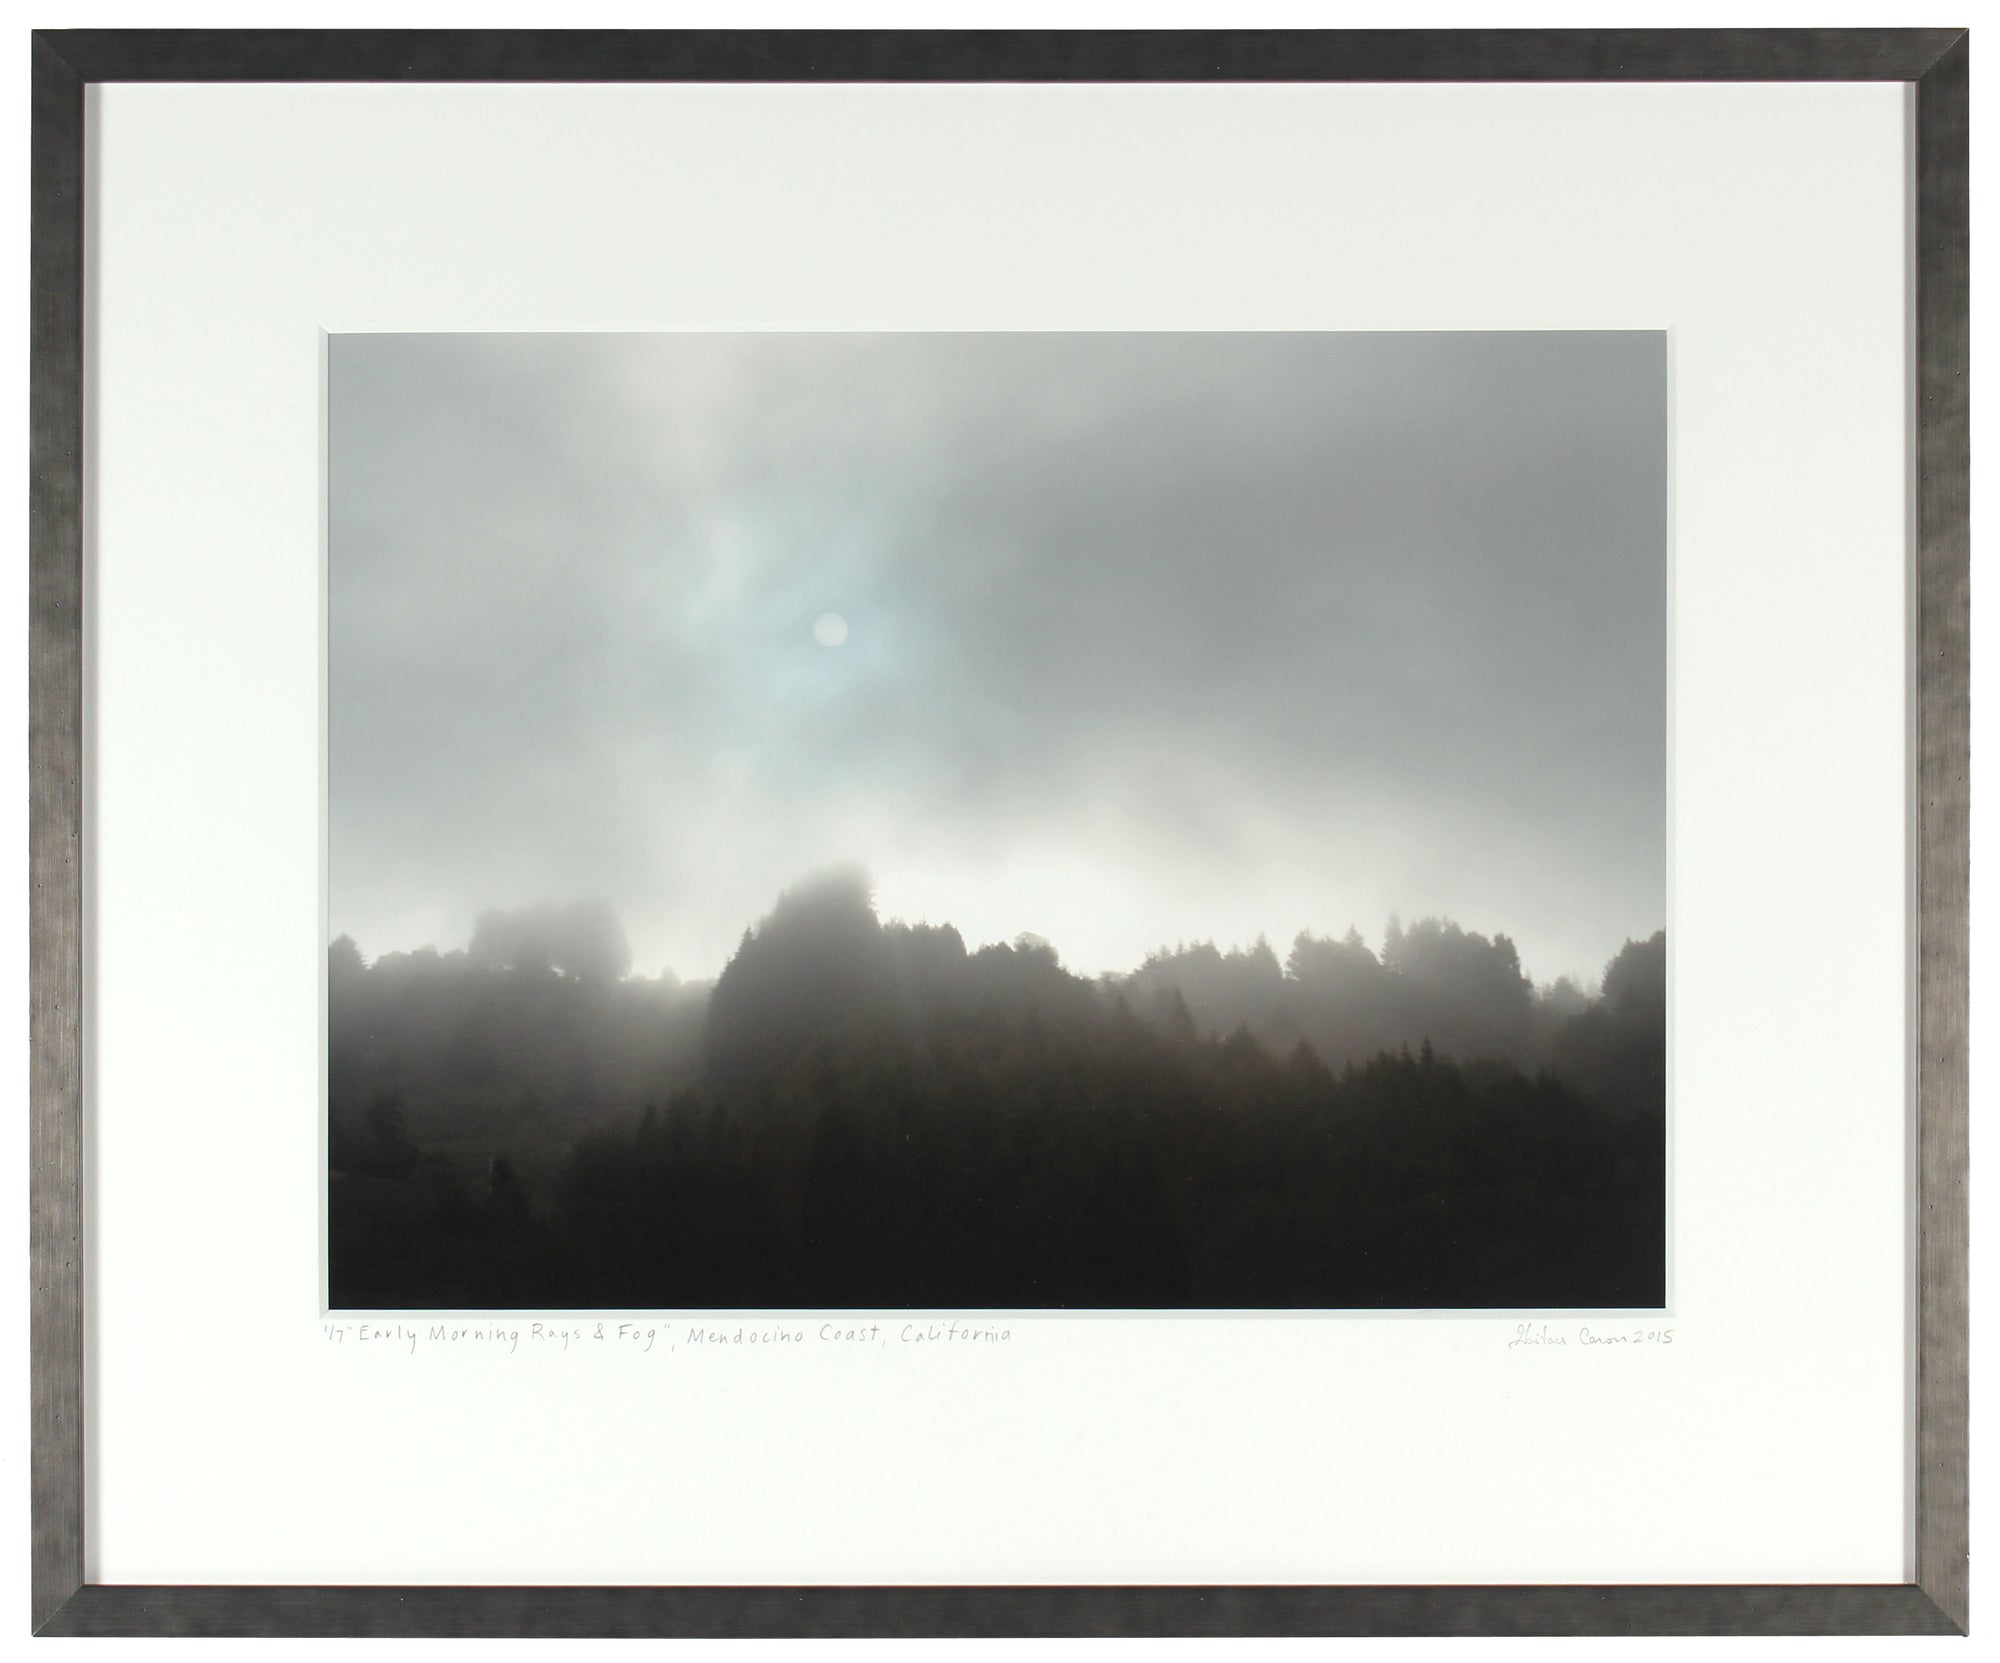 <I>Early Morning, Sun & Fog</I><br>Mendocino Coast, California, 2015<br><br>GC0392